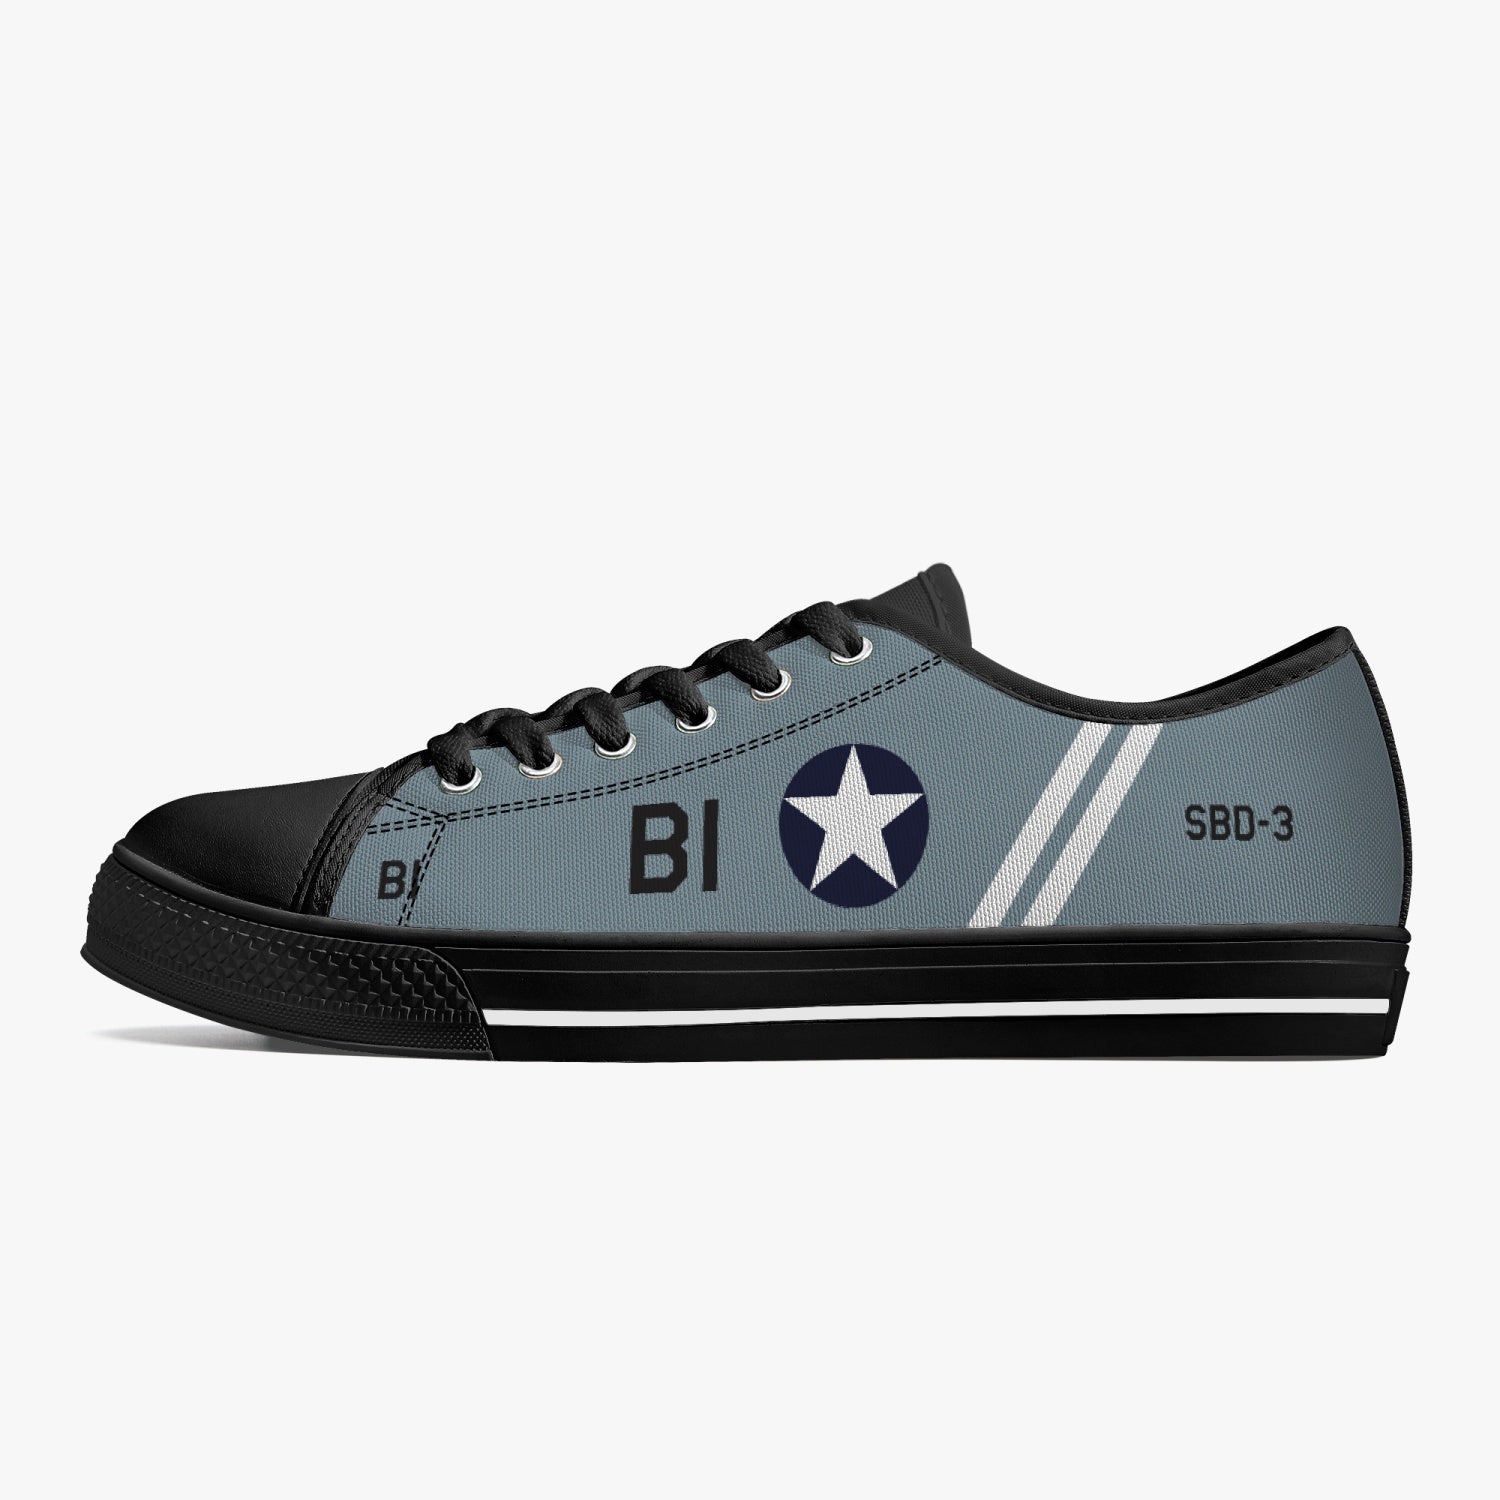 SBD Dauntless "Black B1" Low Top Canvas Shoes - I Love a Hangar